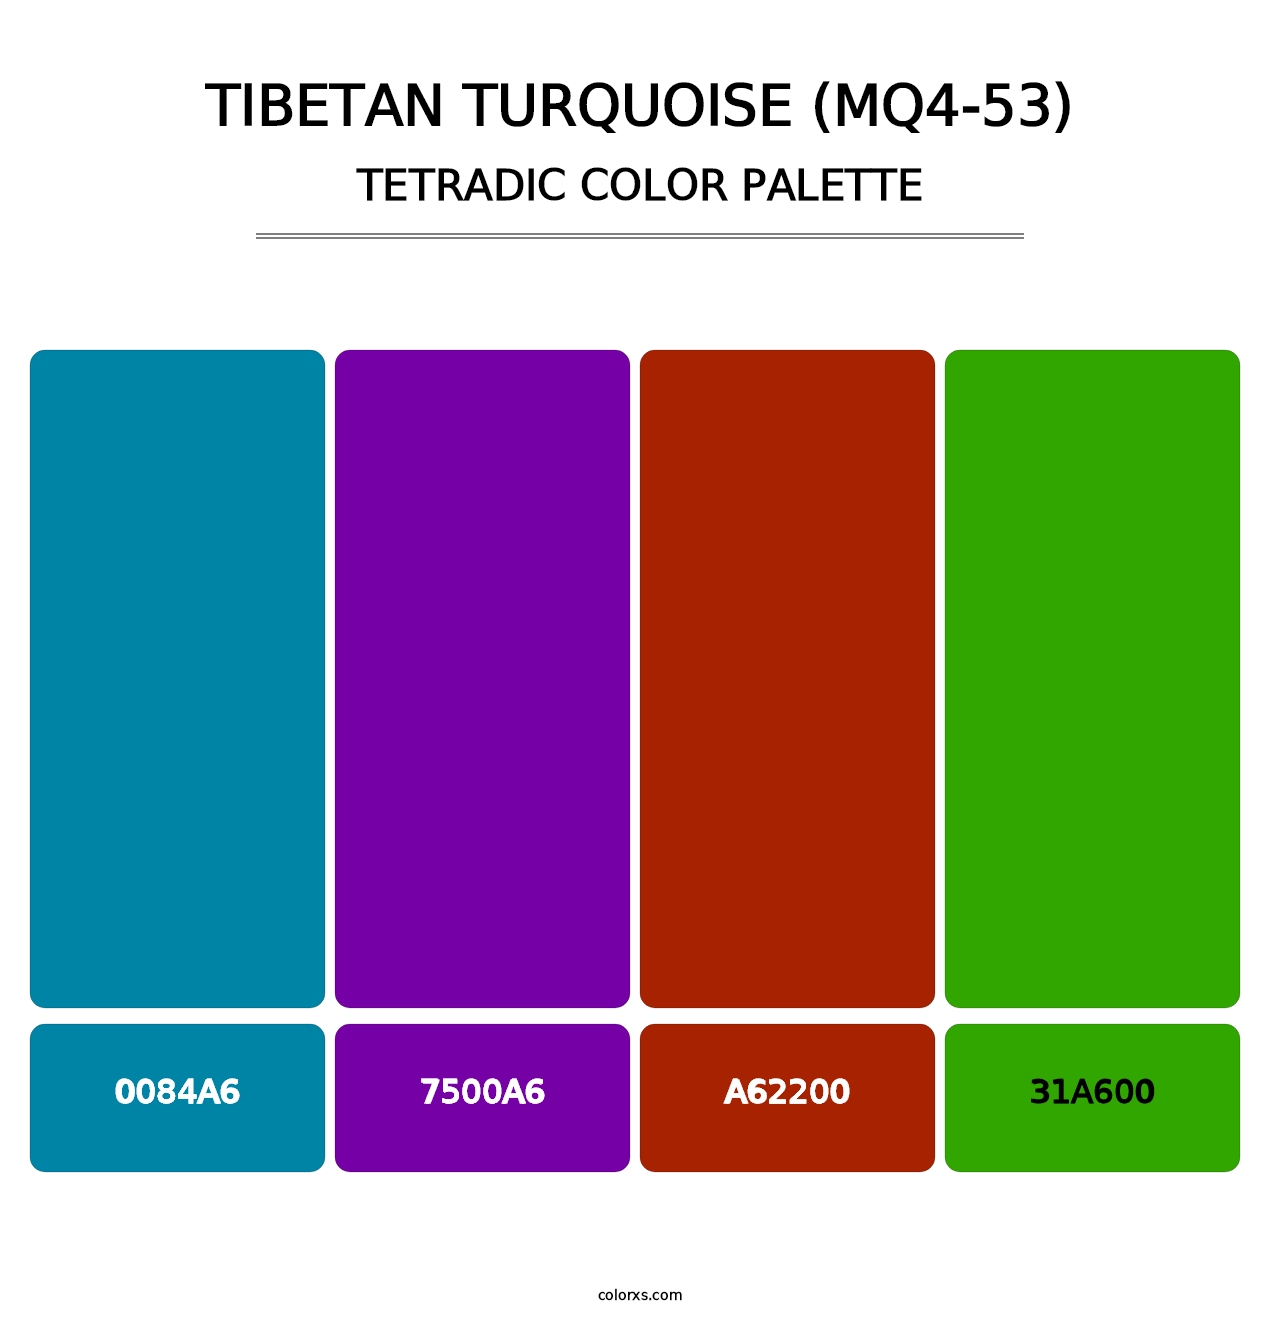 Tibetan Turquoise (MQ4-53) - Tetradic Color Palette